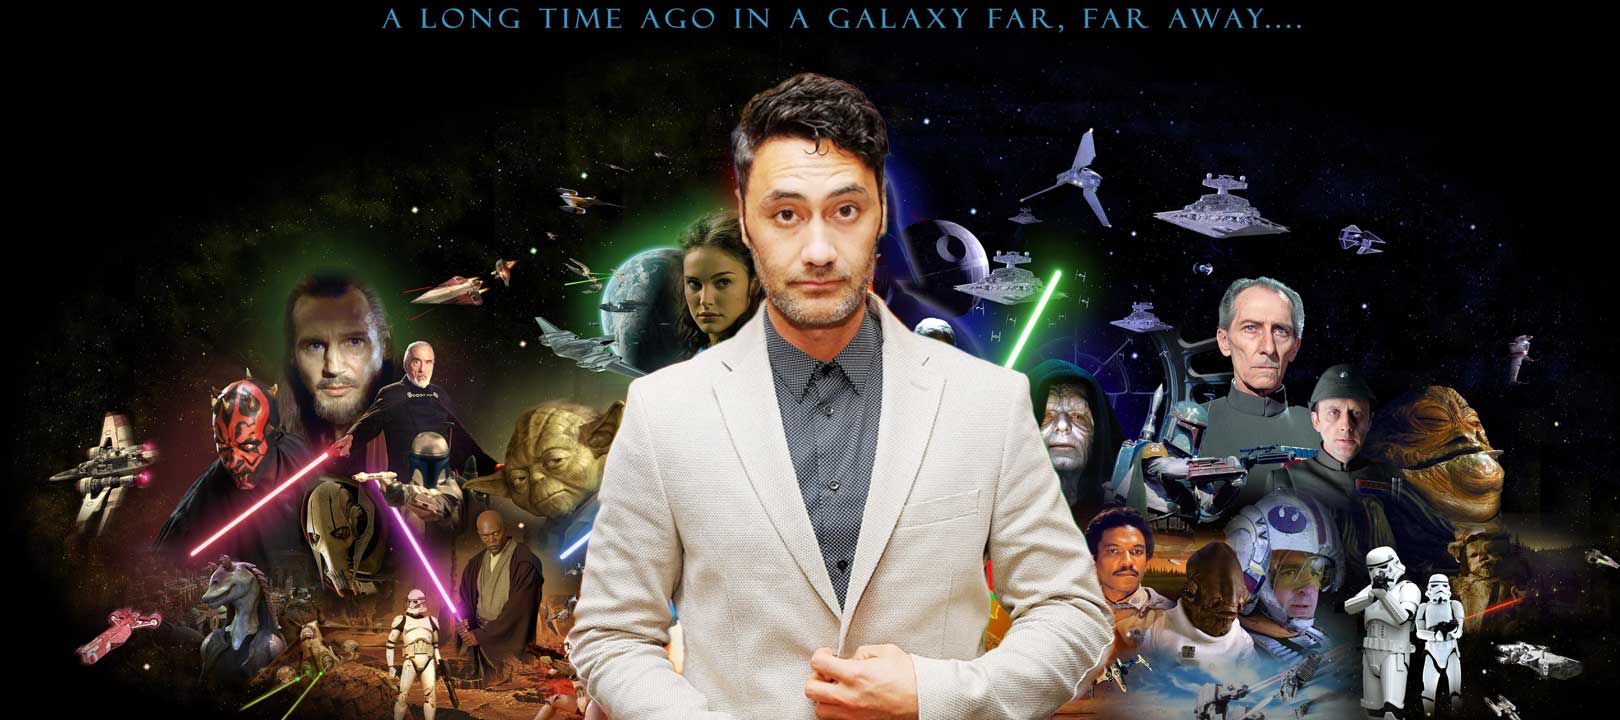 Taika Waitti Hopes His Star Wars Movie Recaptures Essence of Original Trilogy